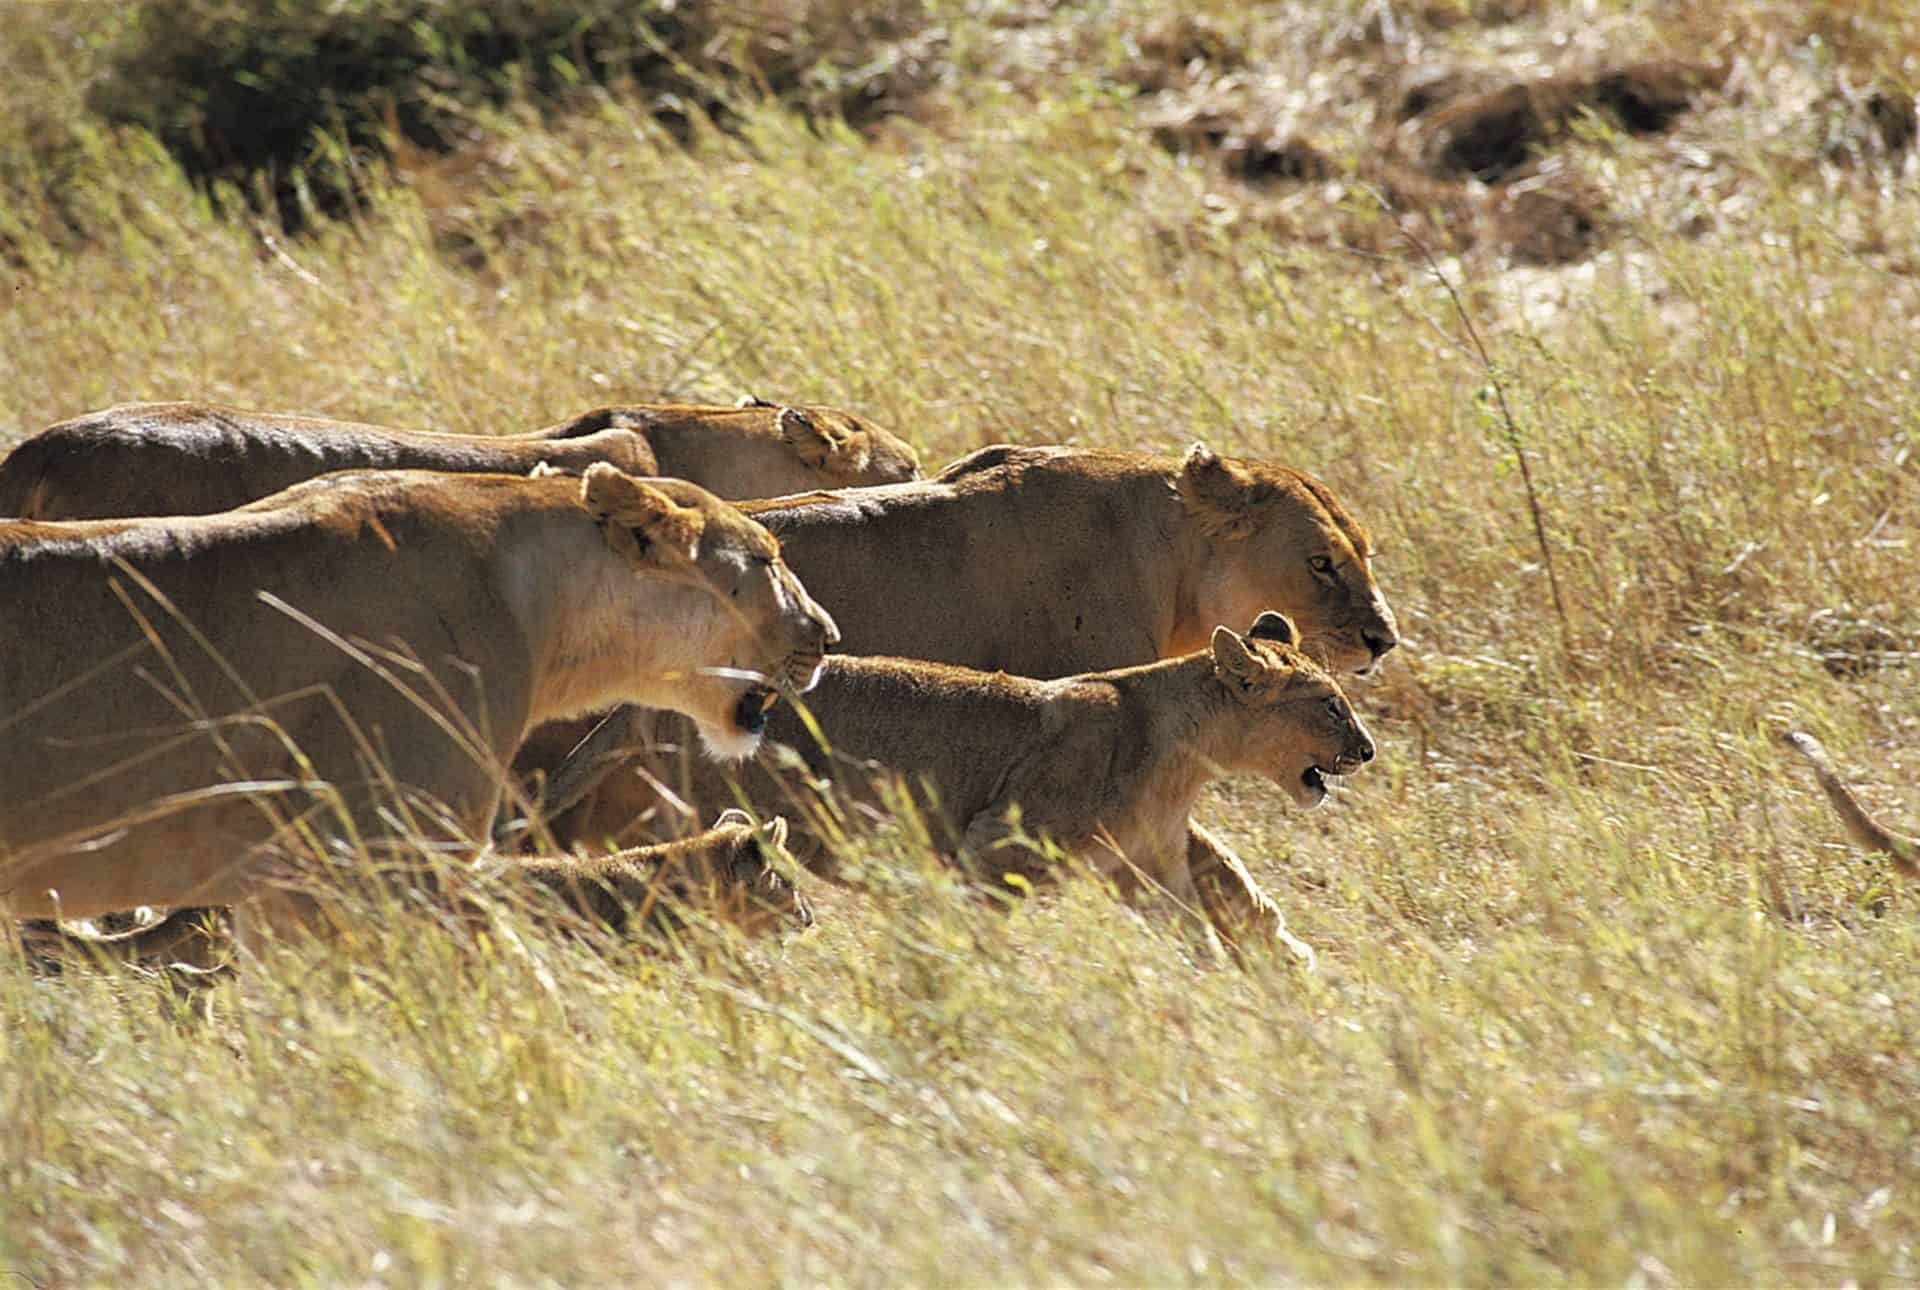 Photo Alain Pons
Lions (Panthera leo) - P.N du Serengeti - Tanzanie